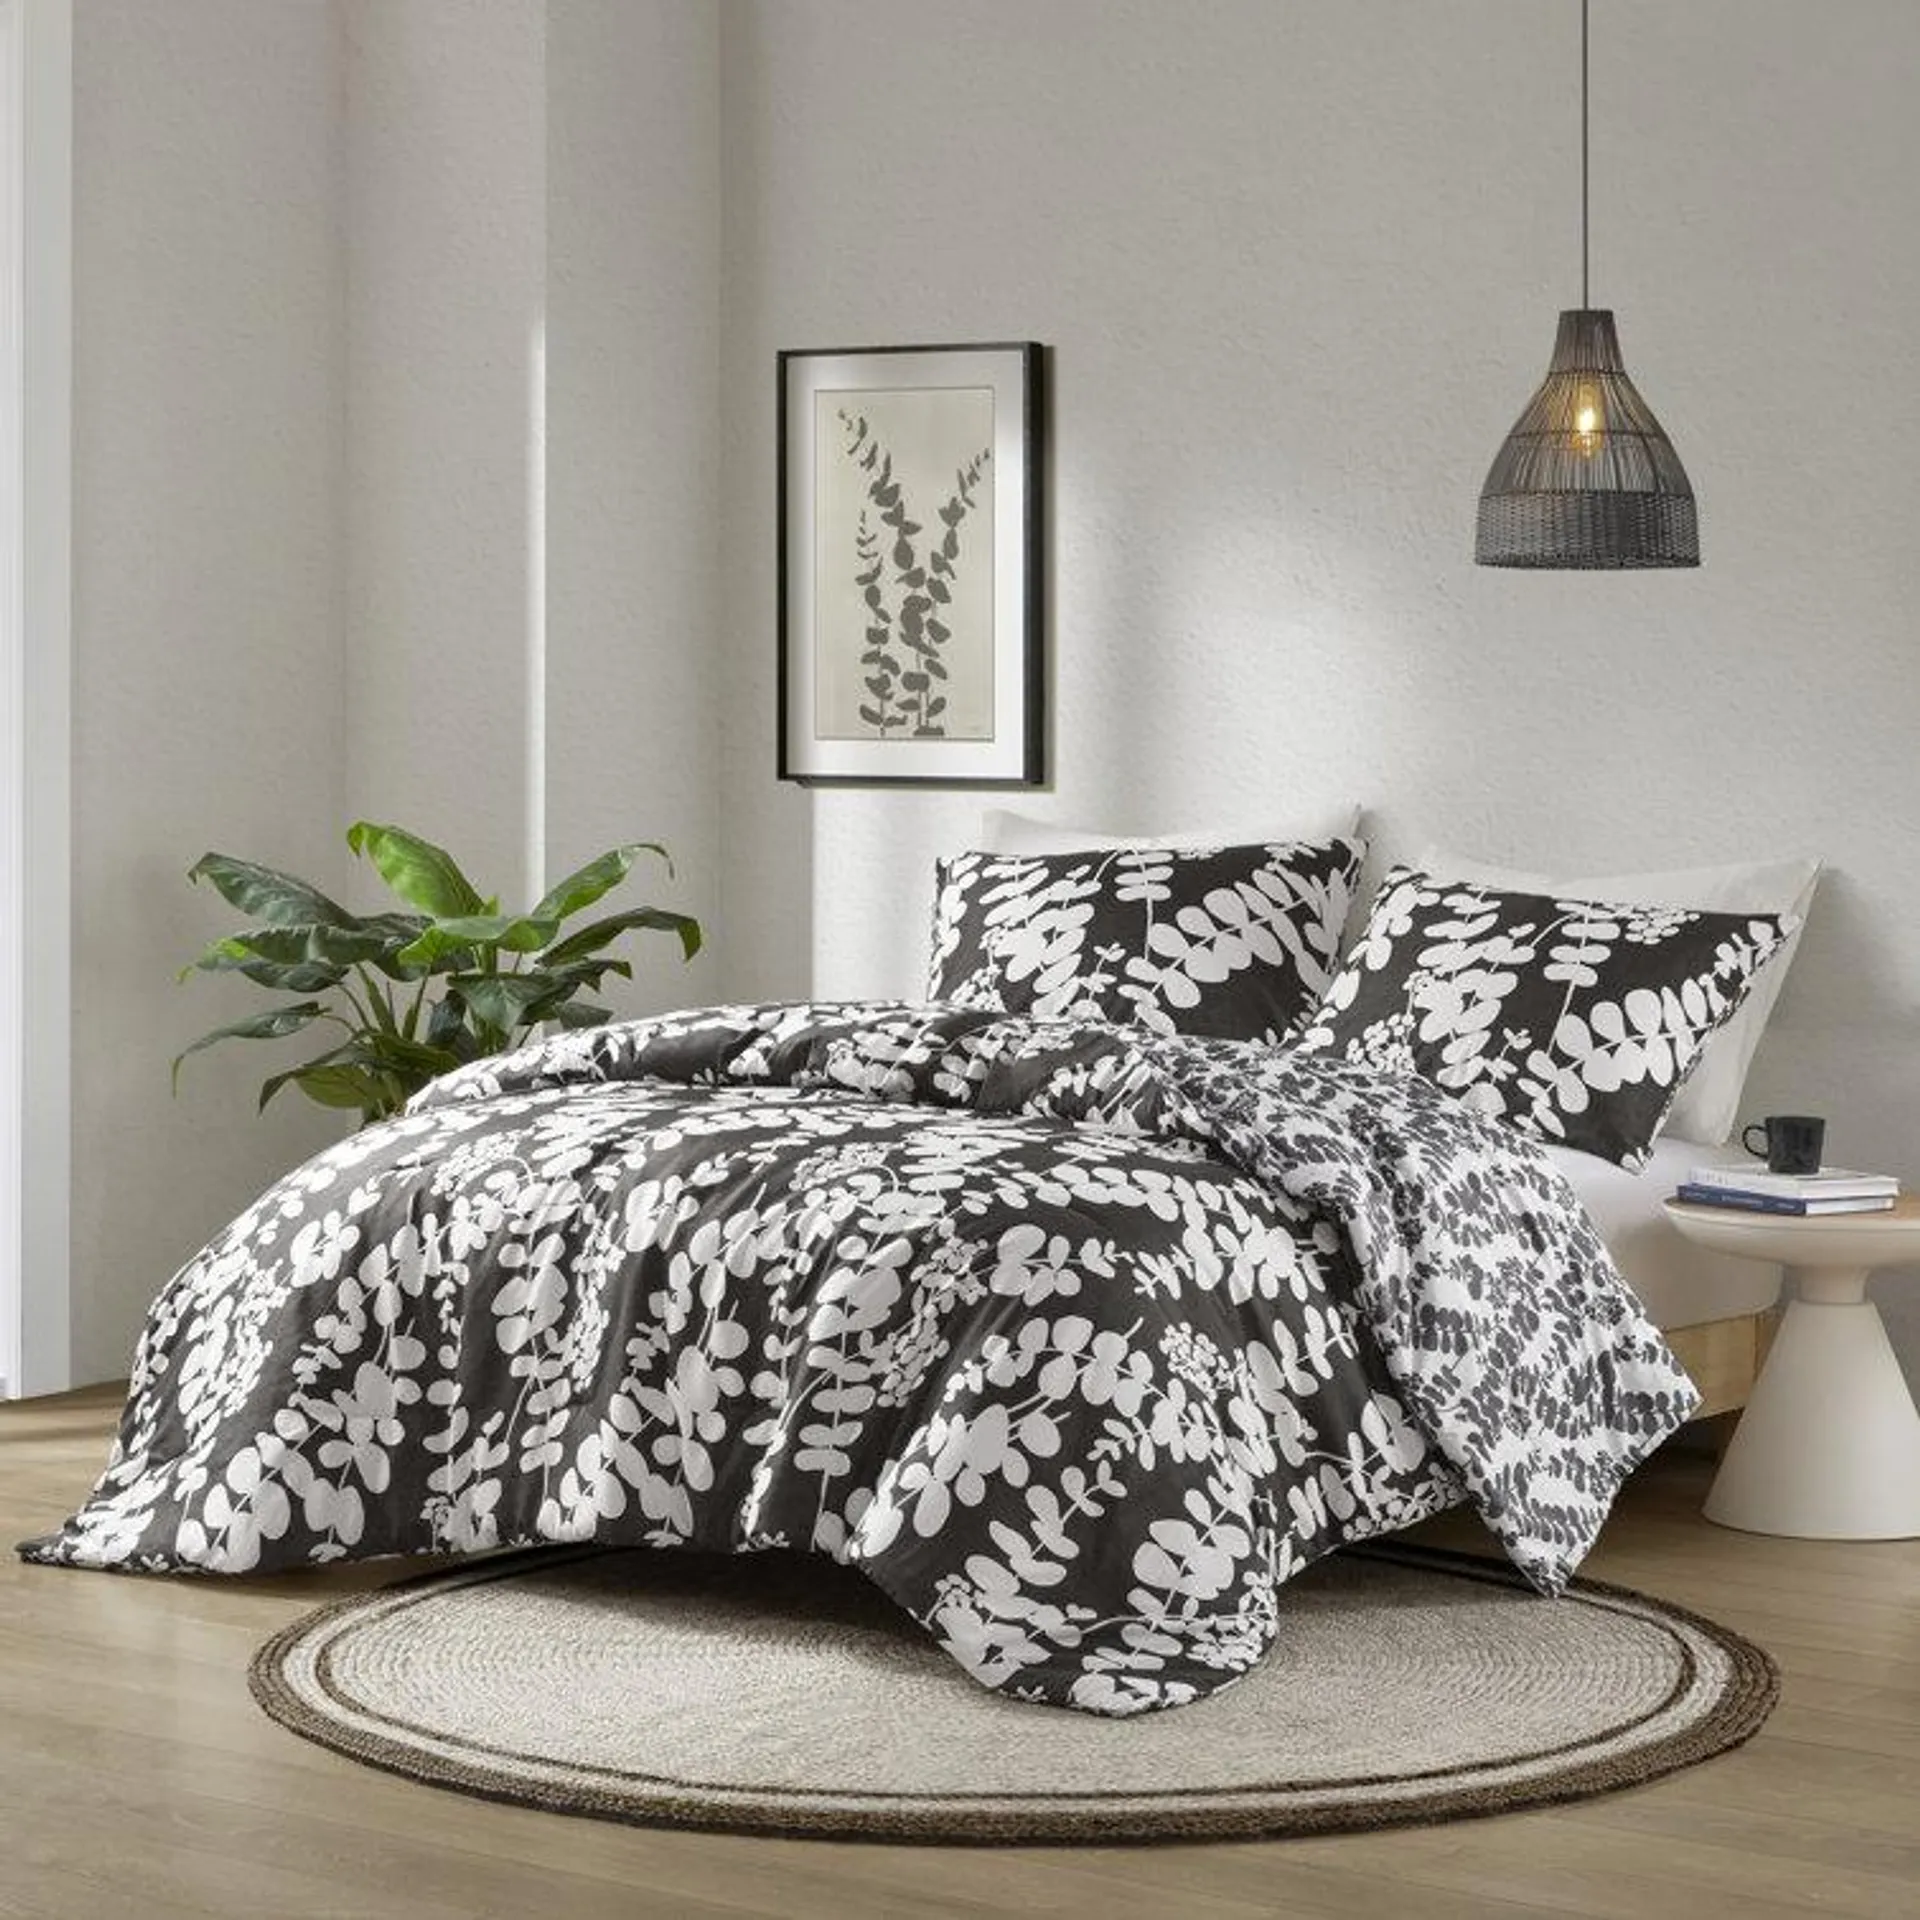 Brayson Floral Reversible Comforter Set in Farmhouse Style